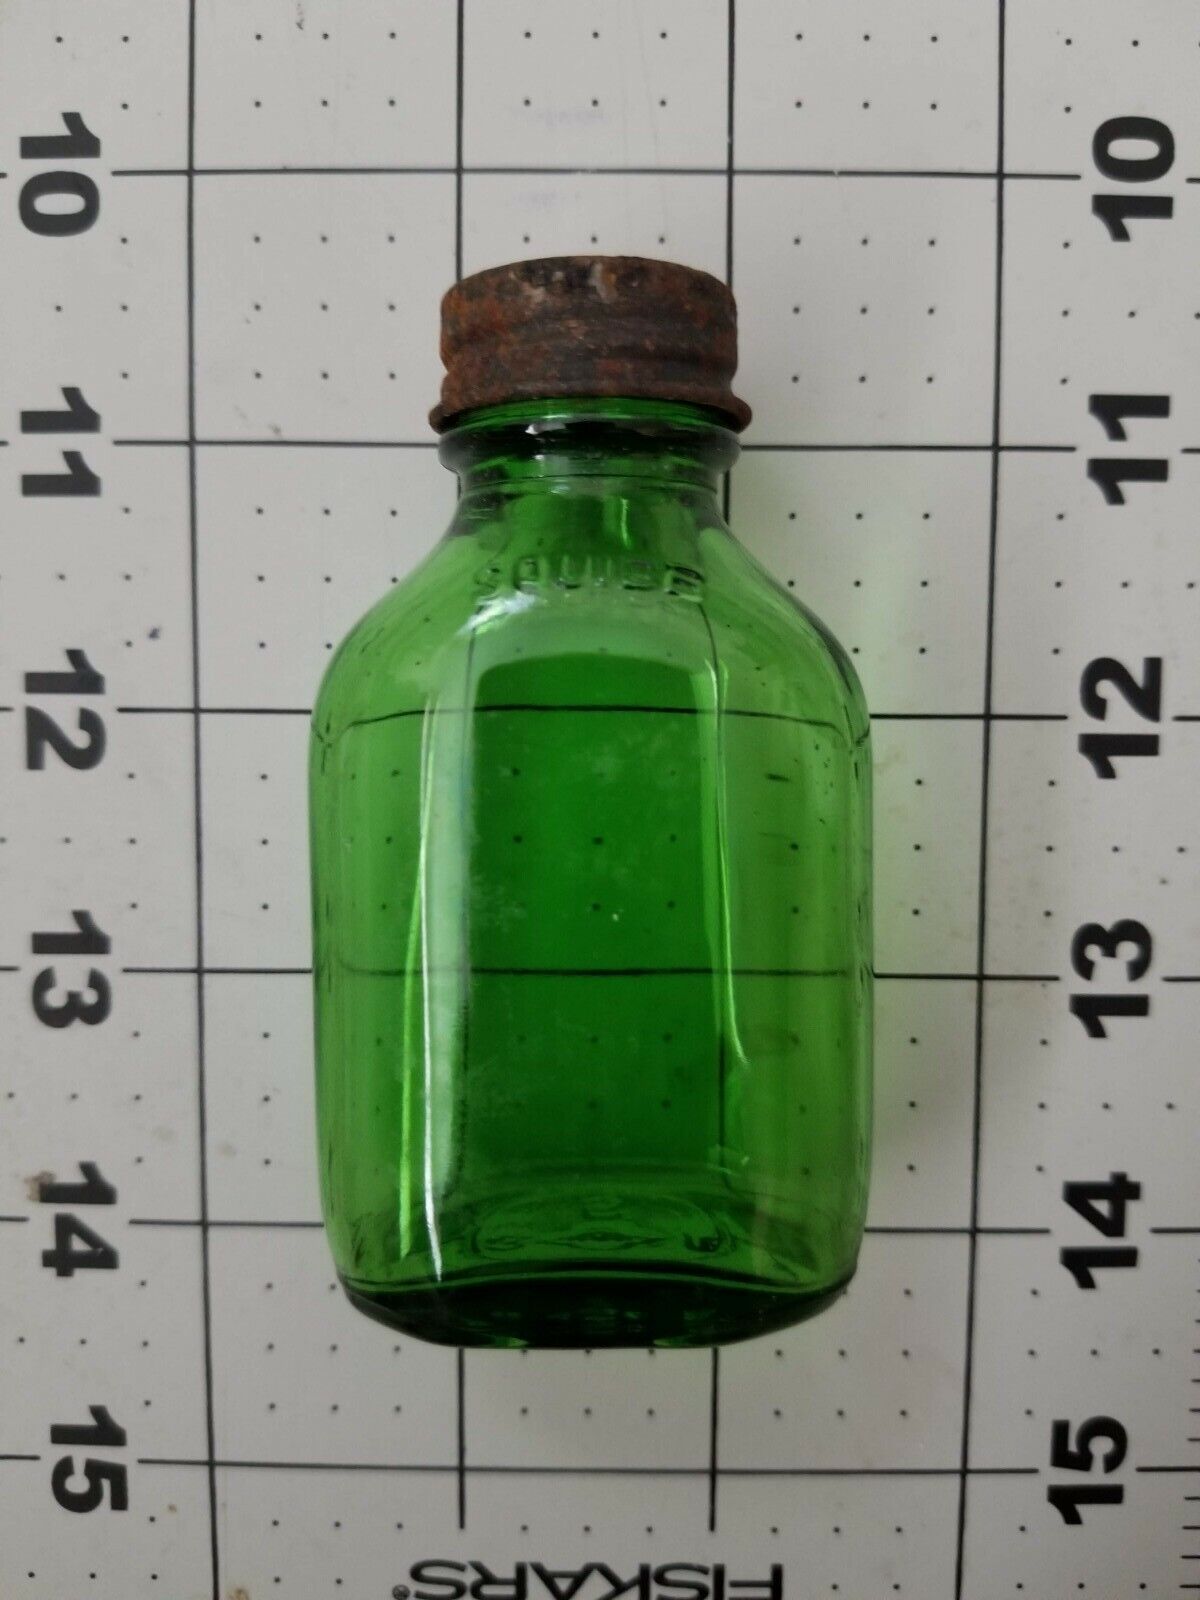 VINTAGE 1930s Squibb Aspirin Green Glass Medicine Bottle with Cap (item5)